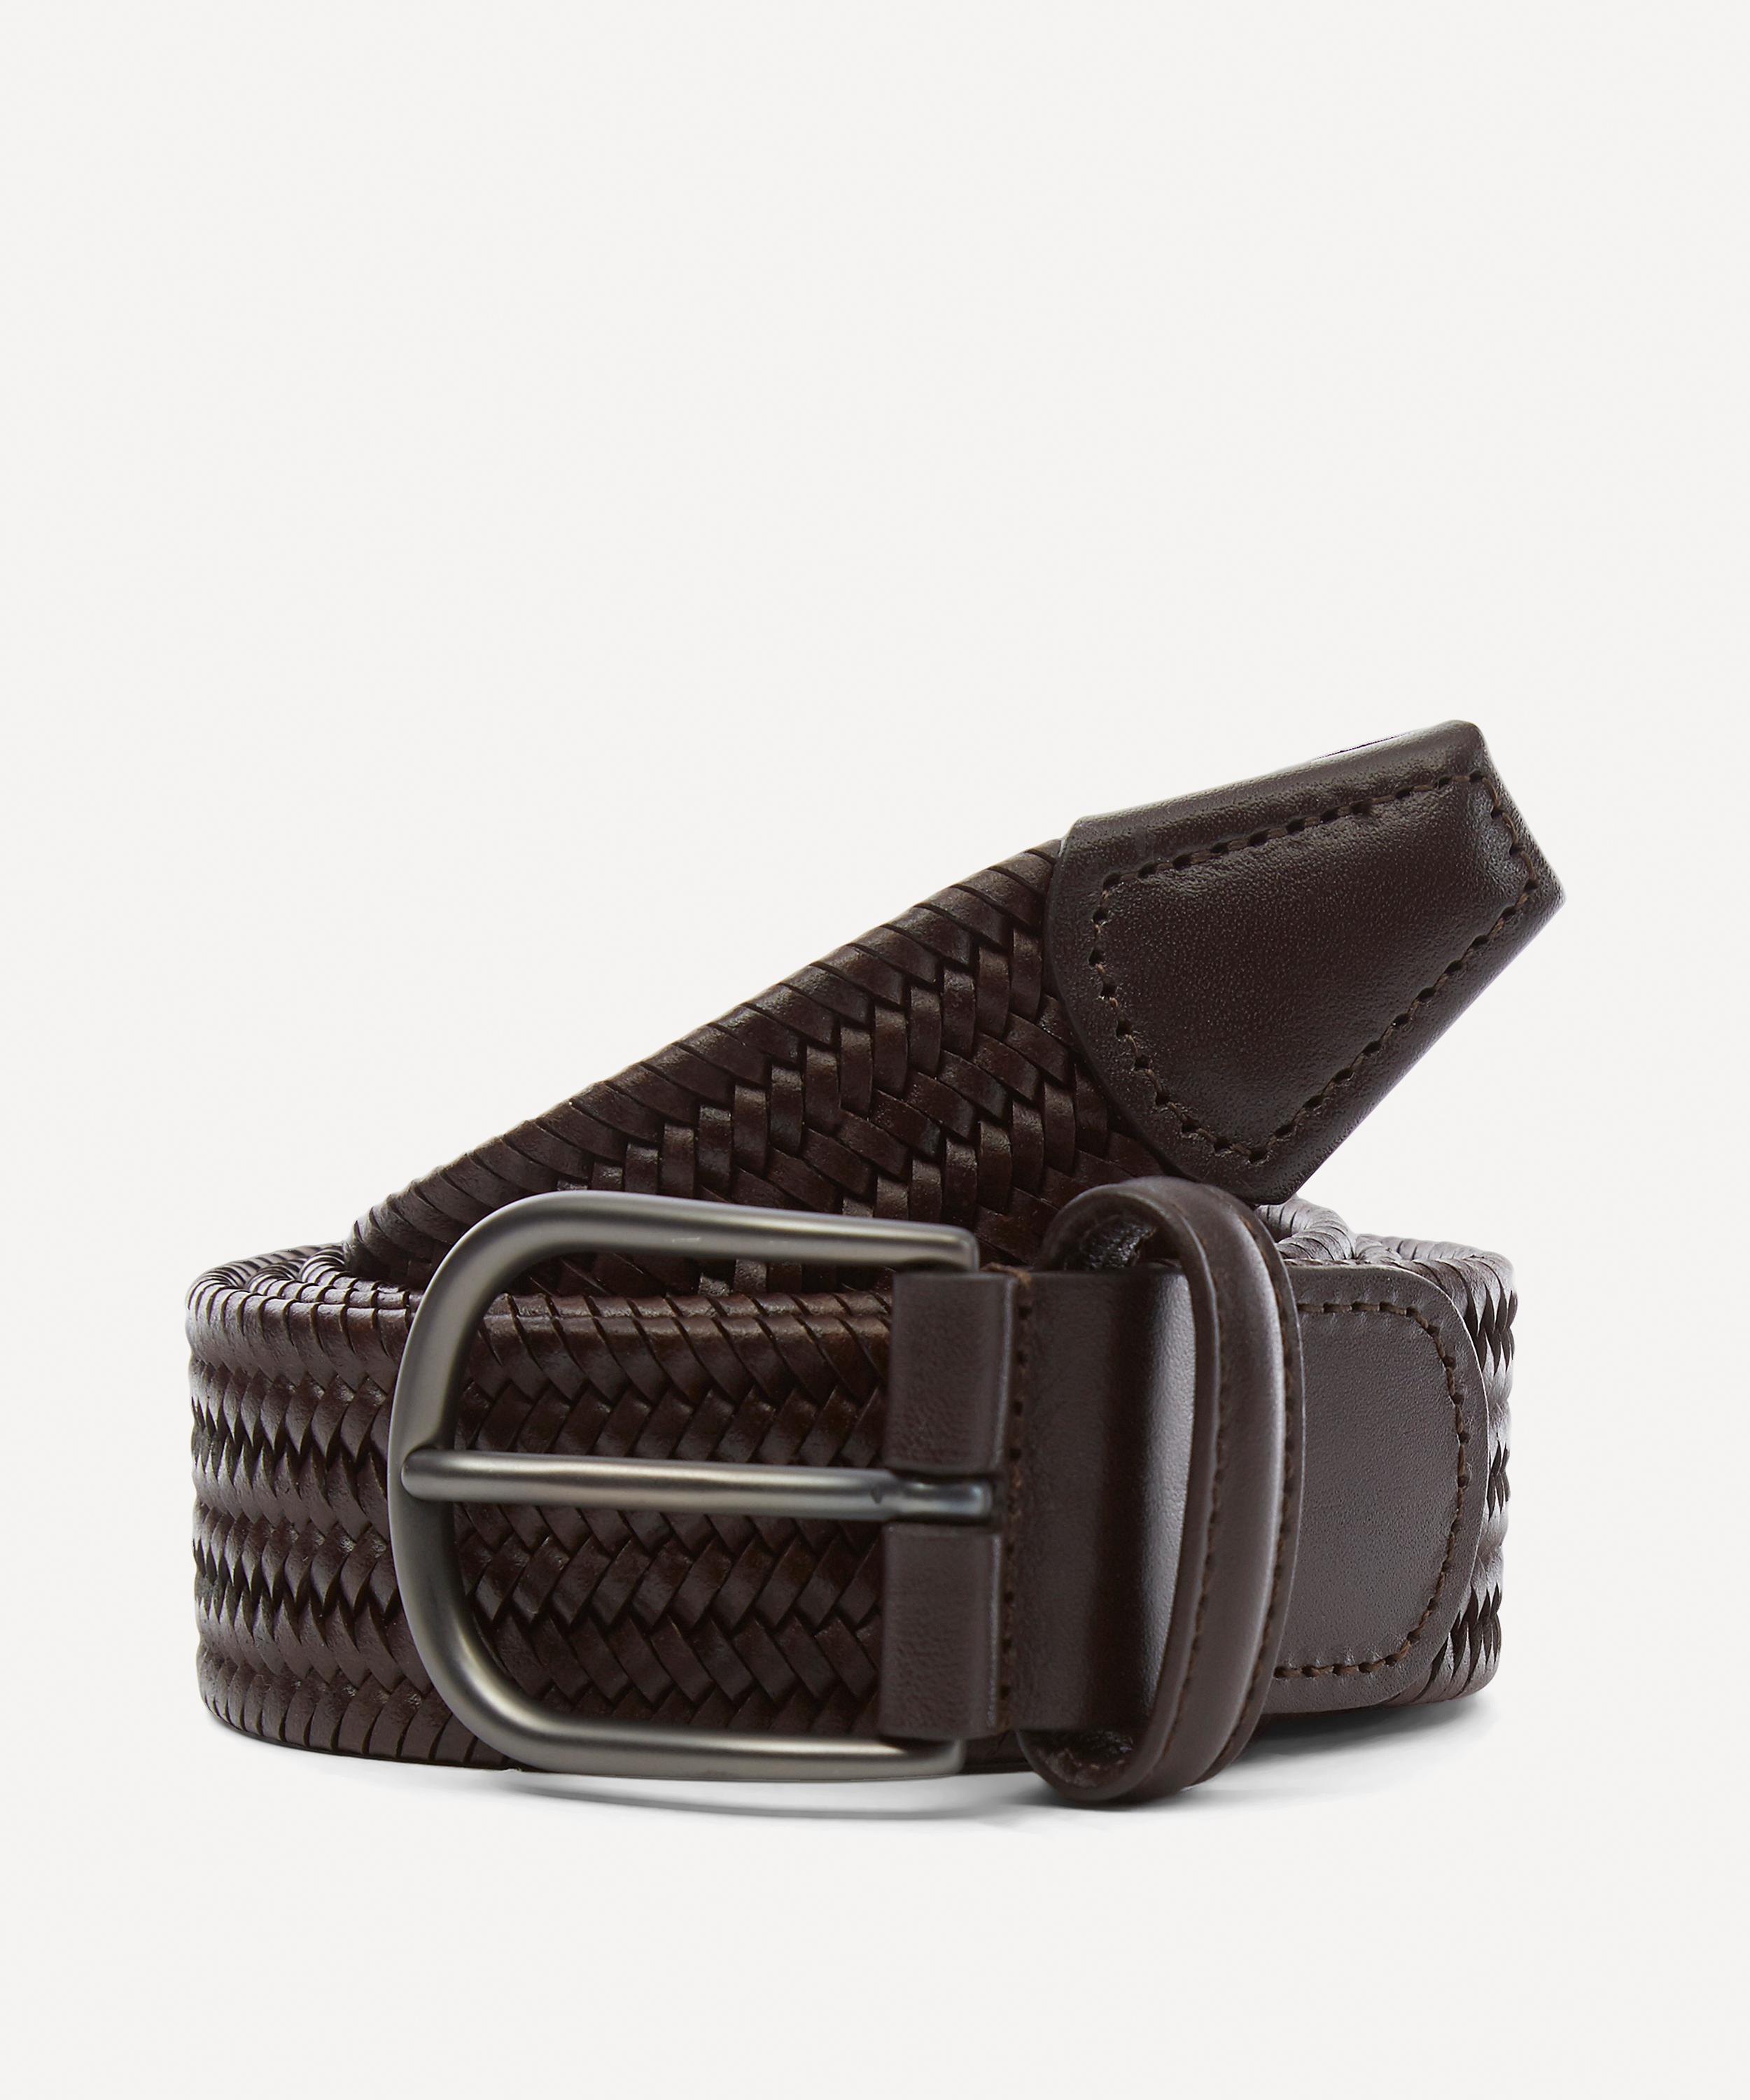 Anderson's Plain Leather Woven Belt